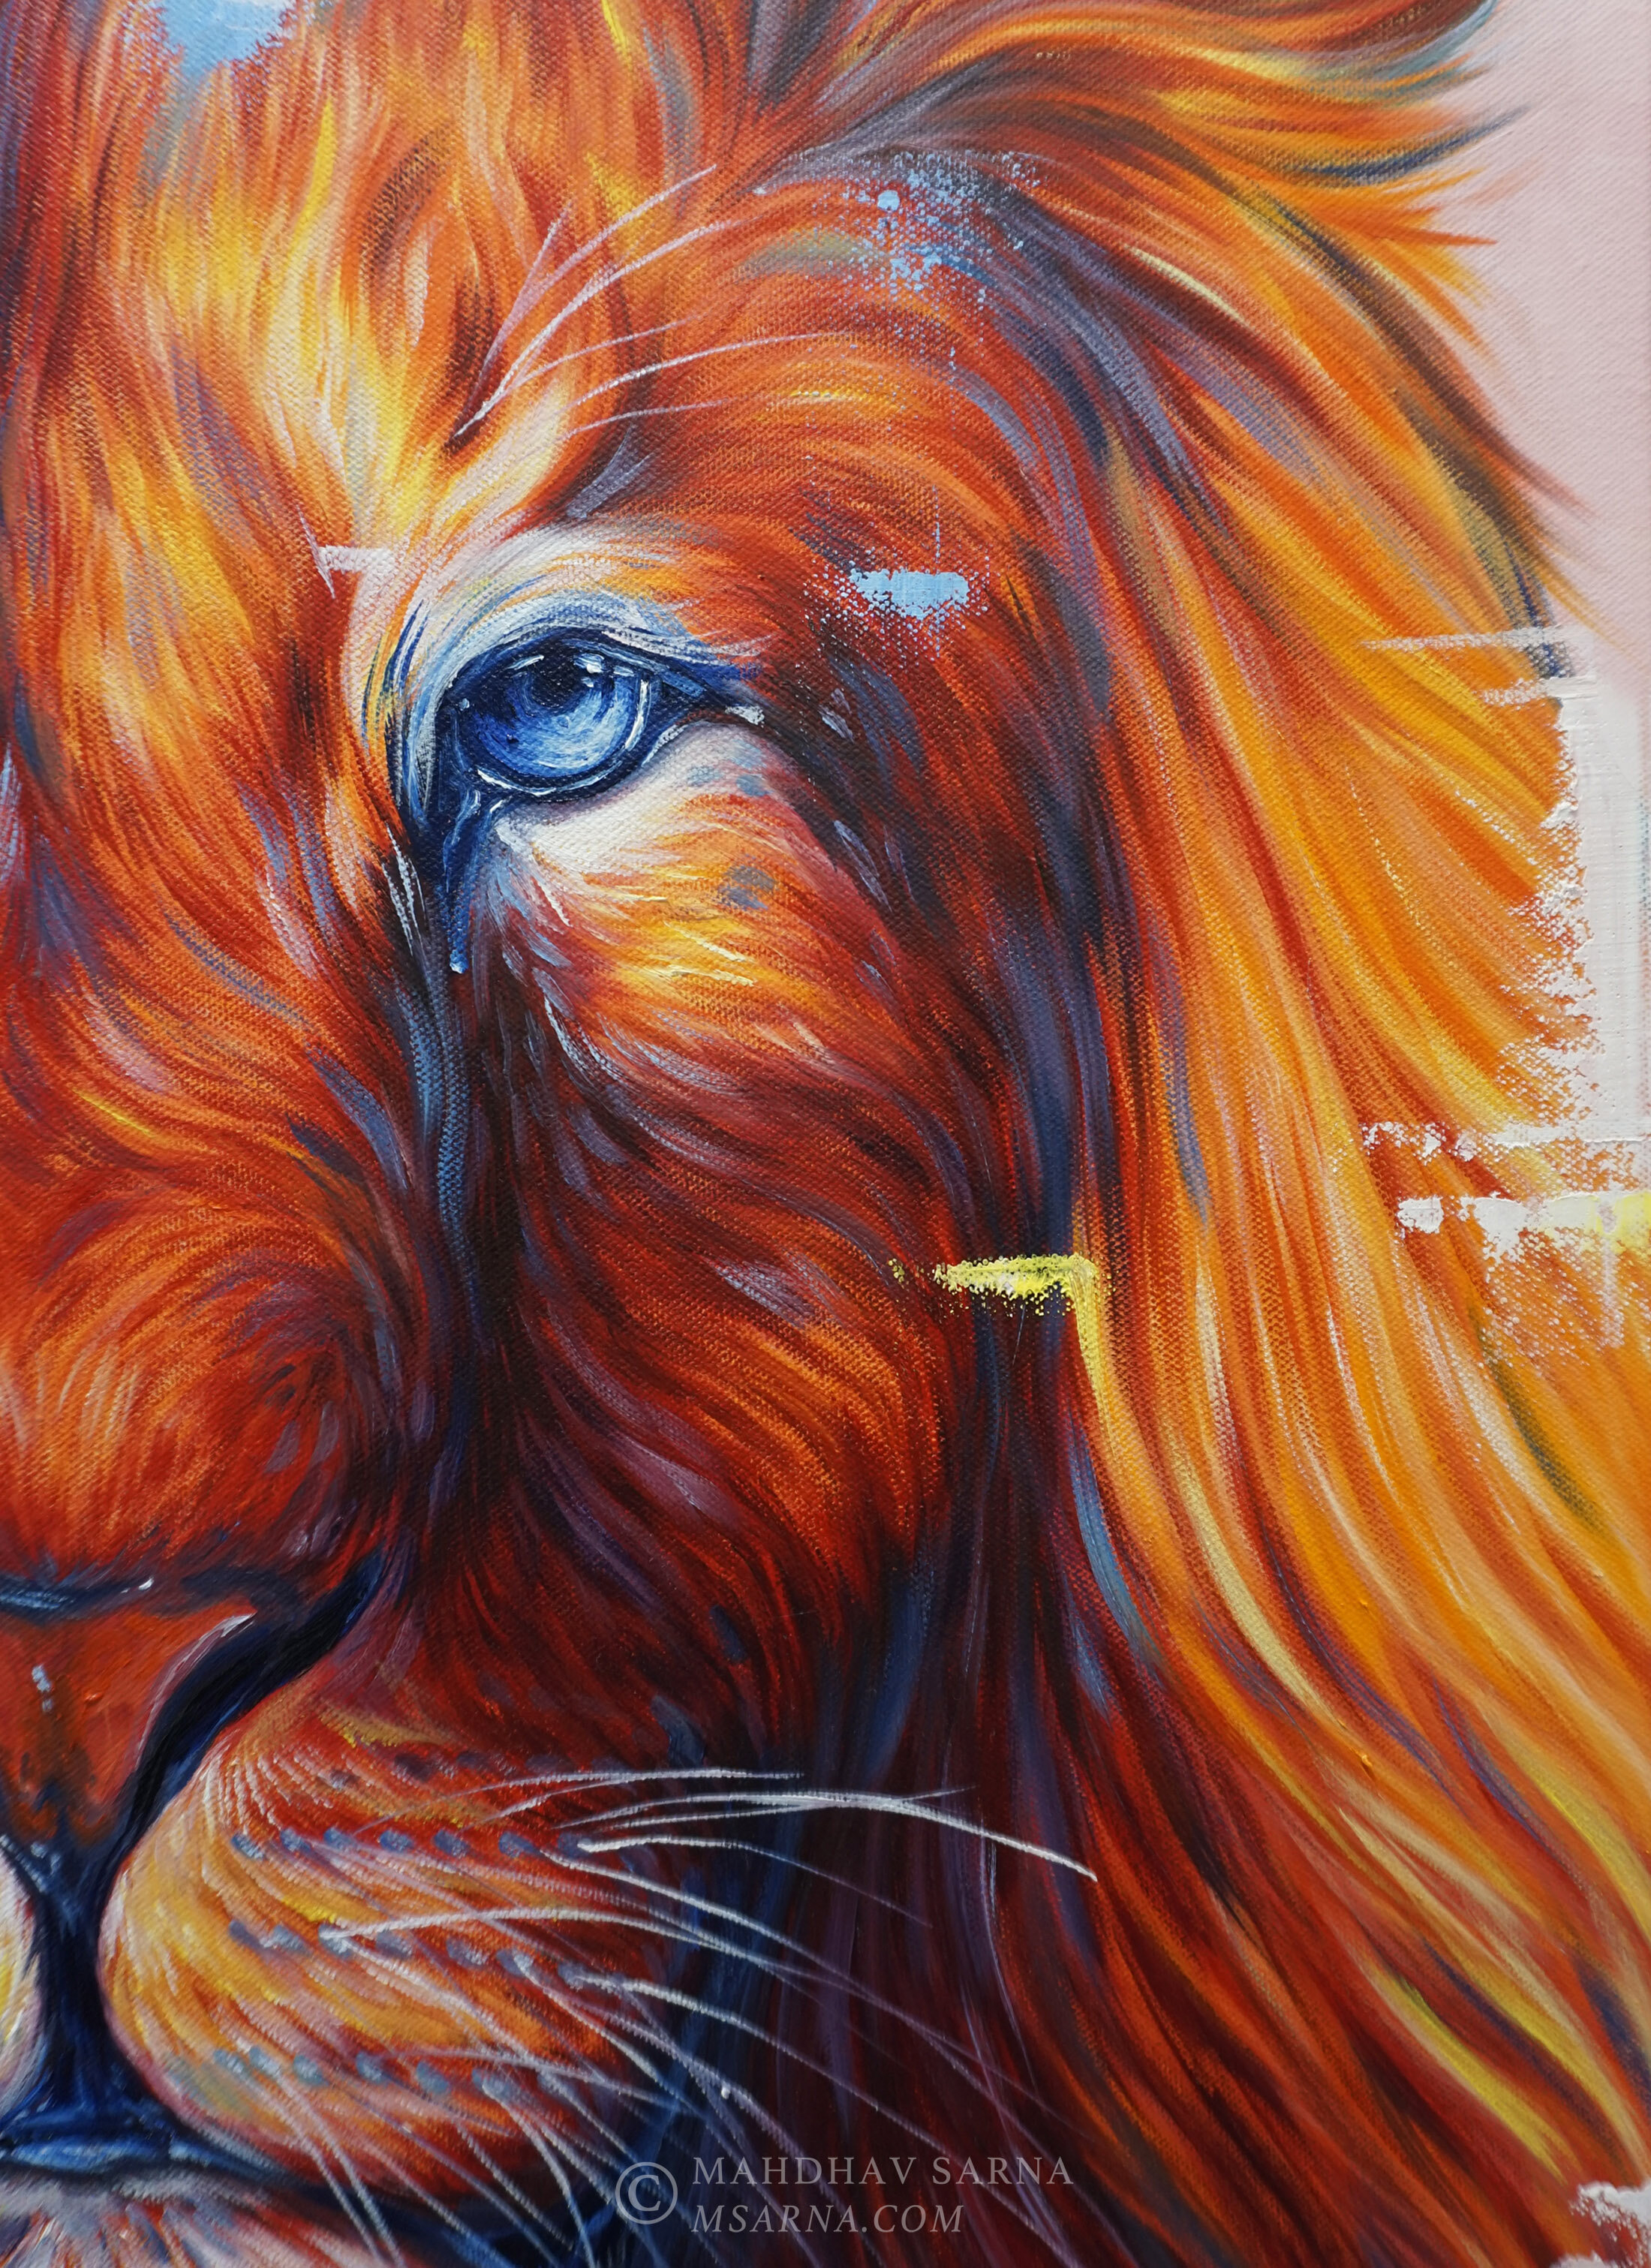 male lion oil painting mspg wildlife art mahdhav sarna 01.jpg